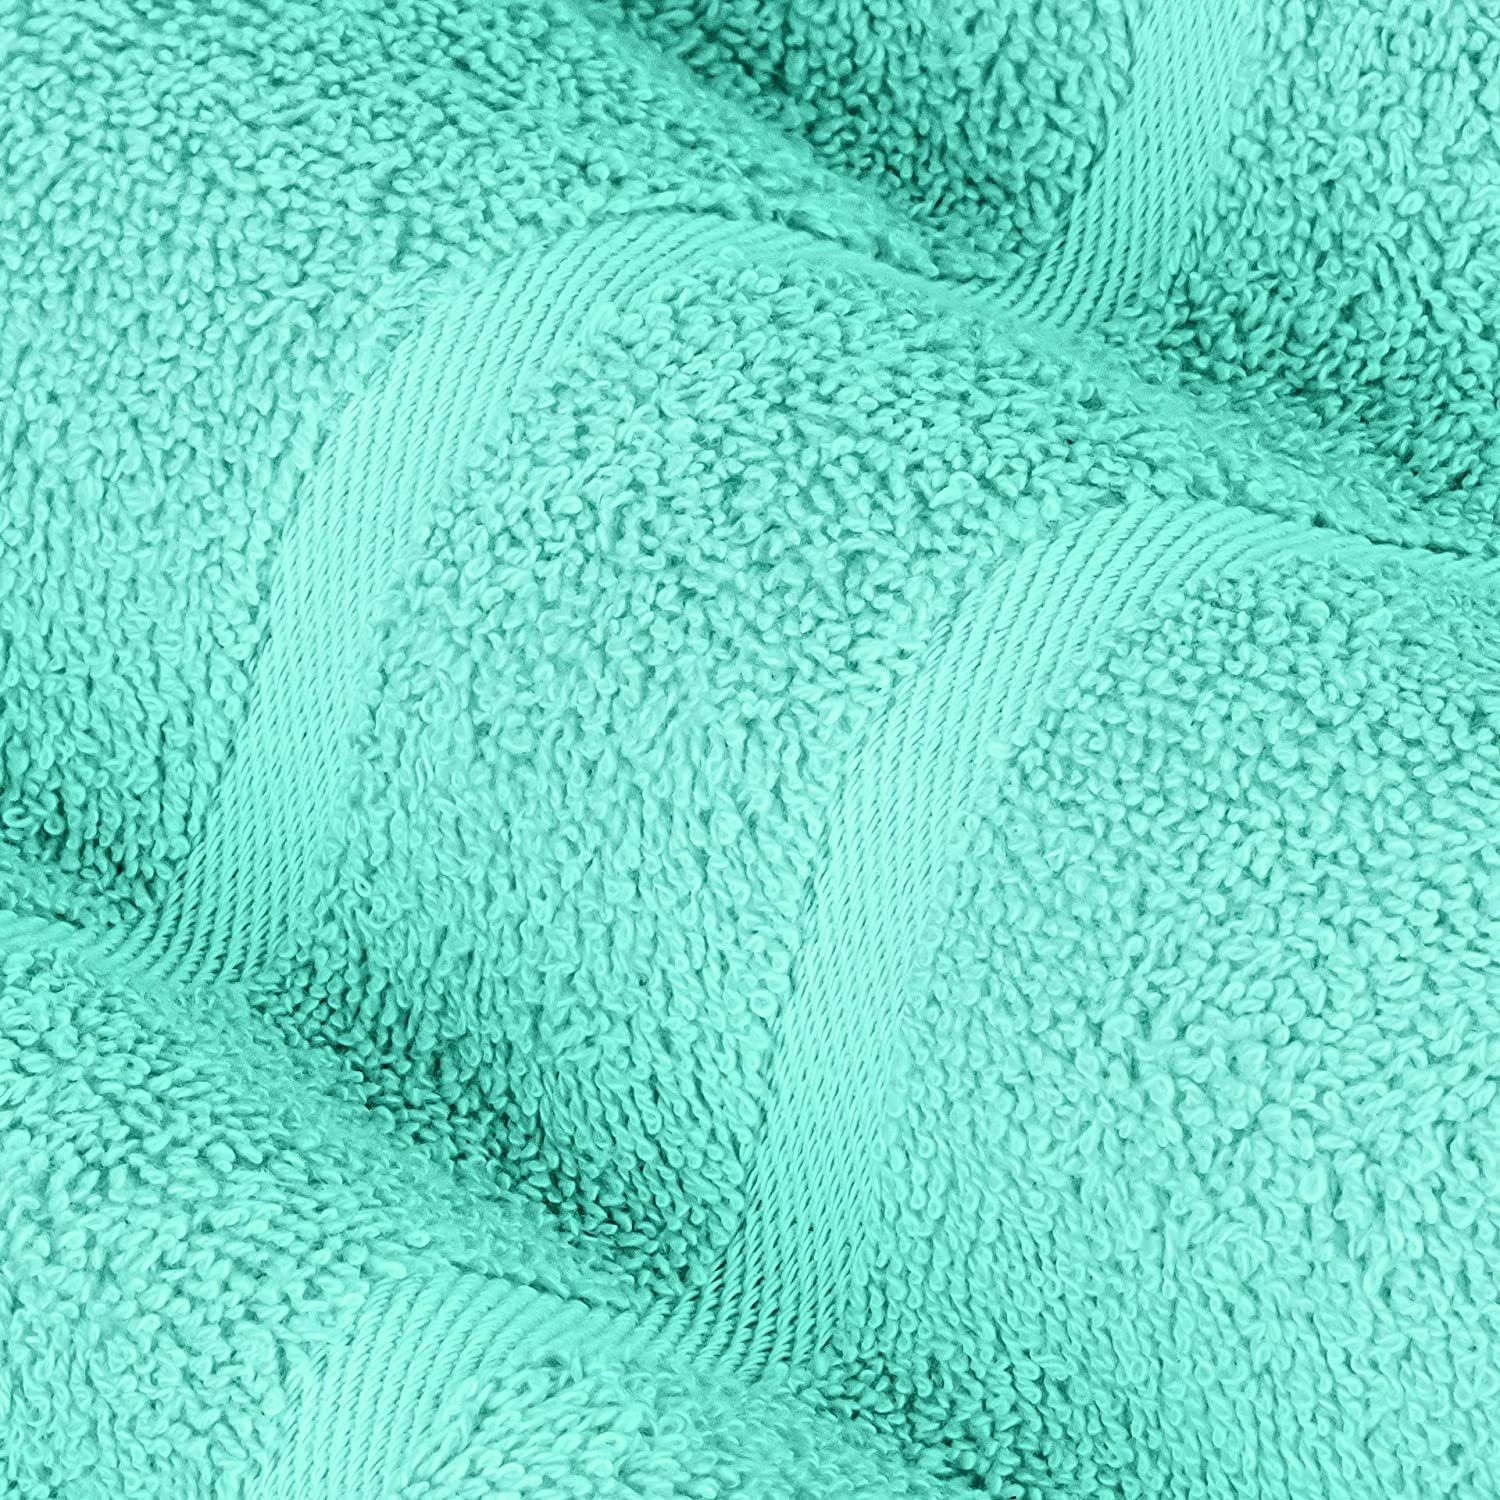 StickandShine Handtuch Set Baumwolle 100% verschiedenen SET Baumwolle Handtücher GSM 100% 16er Gästehandtuch 500 Badetücher Frottee 4x 6x Handtuch Pack, GSM als Mint 2x Duschtücher Teilig) in (16 500 Farben 4x